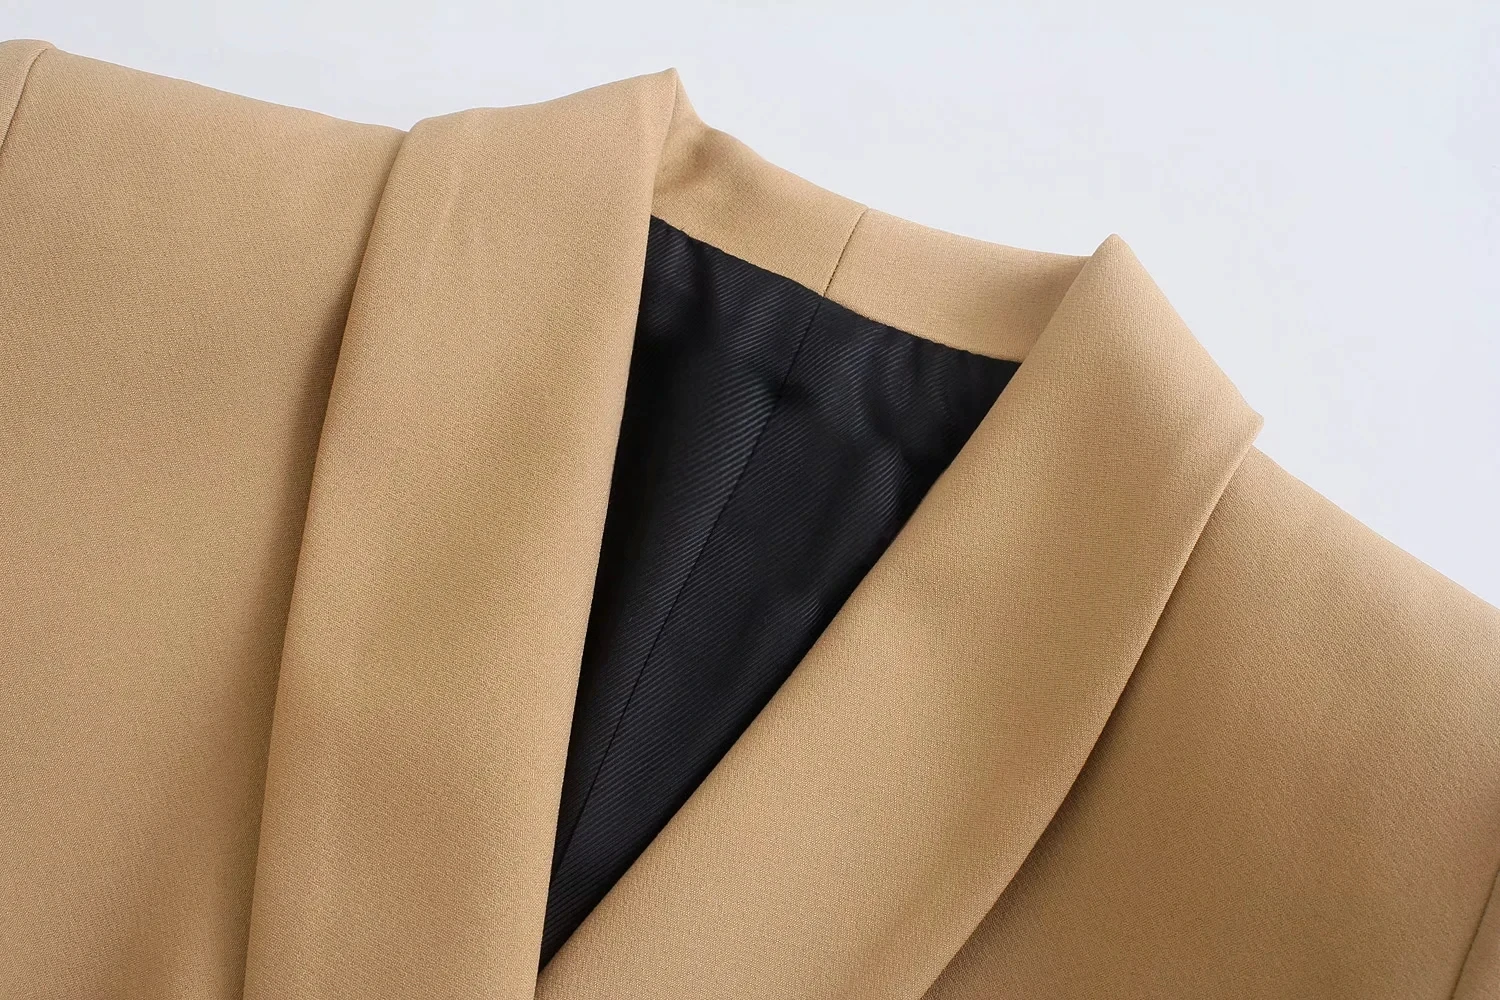 2021 Women Fashion long double-breasted blazer Coat Vintage Long Sleeve Pockets Female Outerwear Chic Veste Femme Jackets blazer pants set